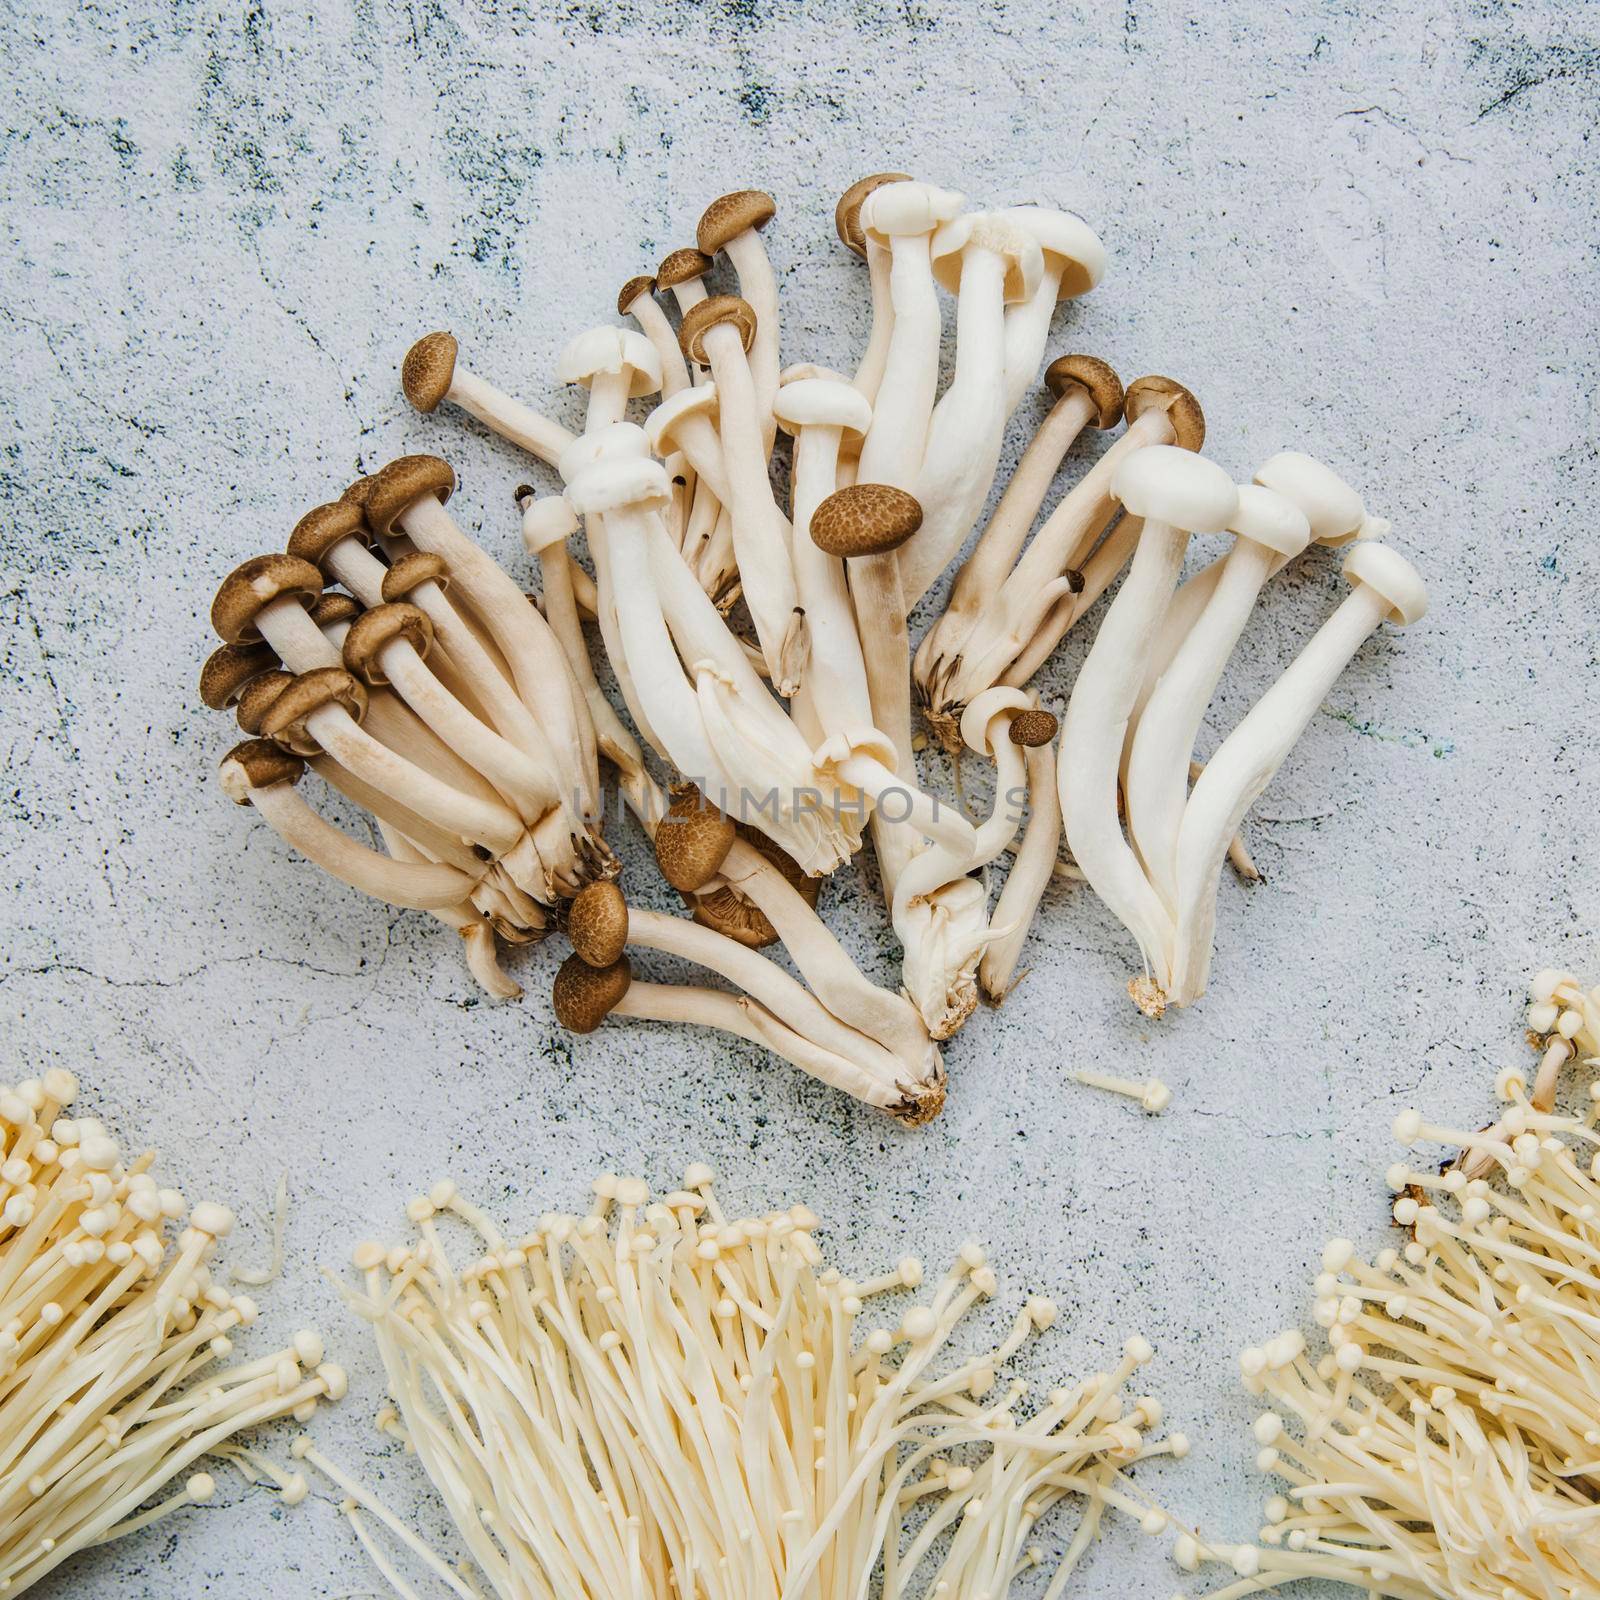 edible mushrooms arrange floor by Zahard